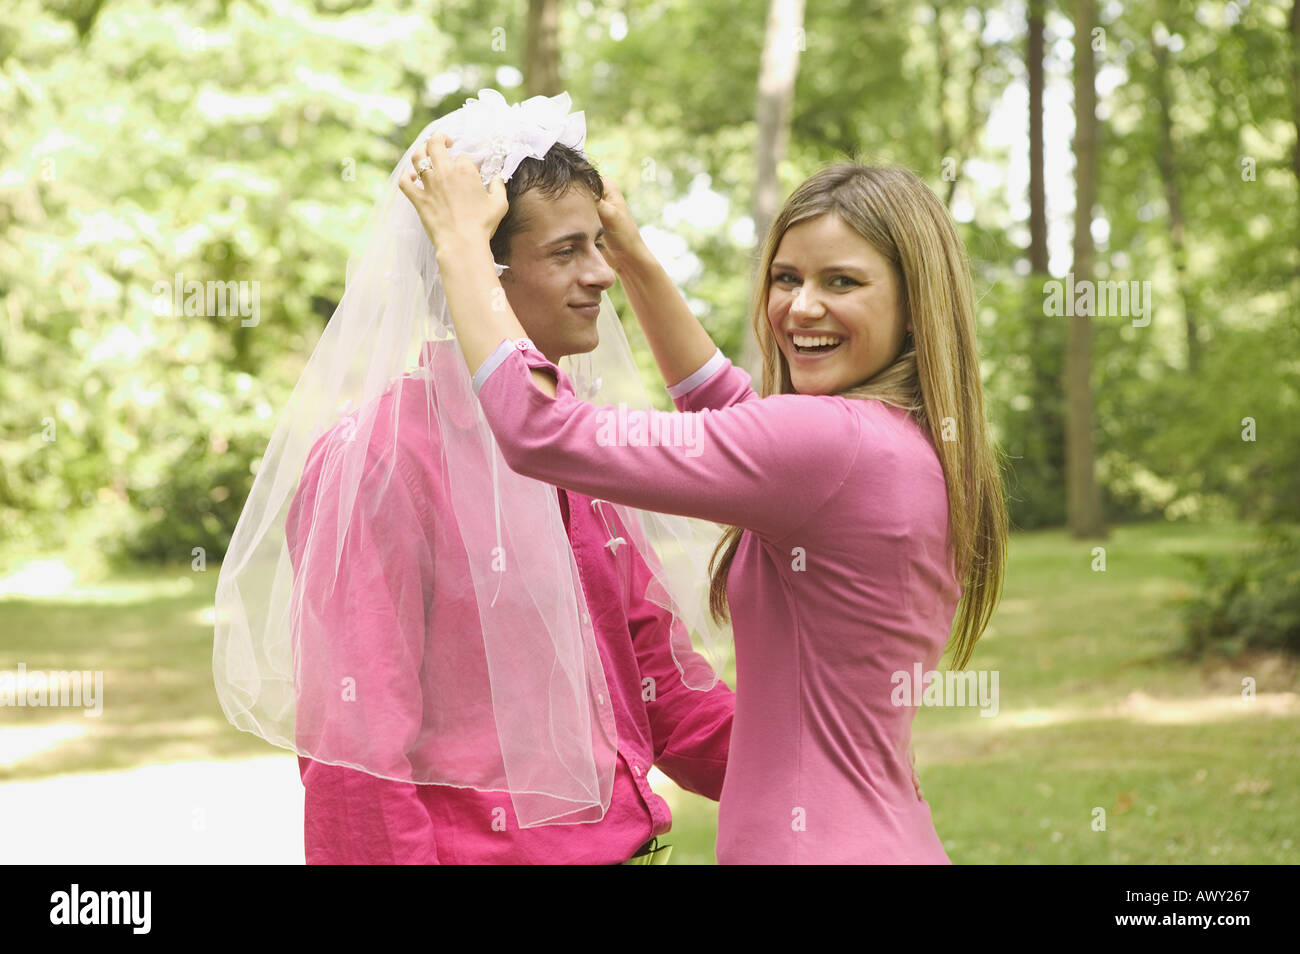 Woman placing wedding veil on her husband Stock Photo